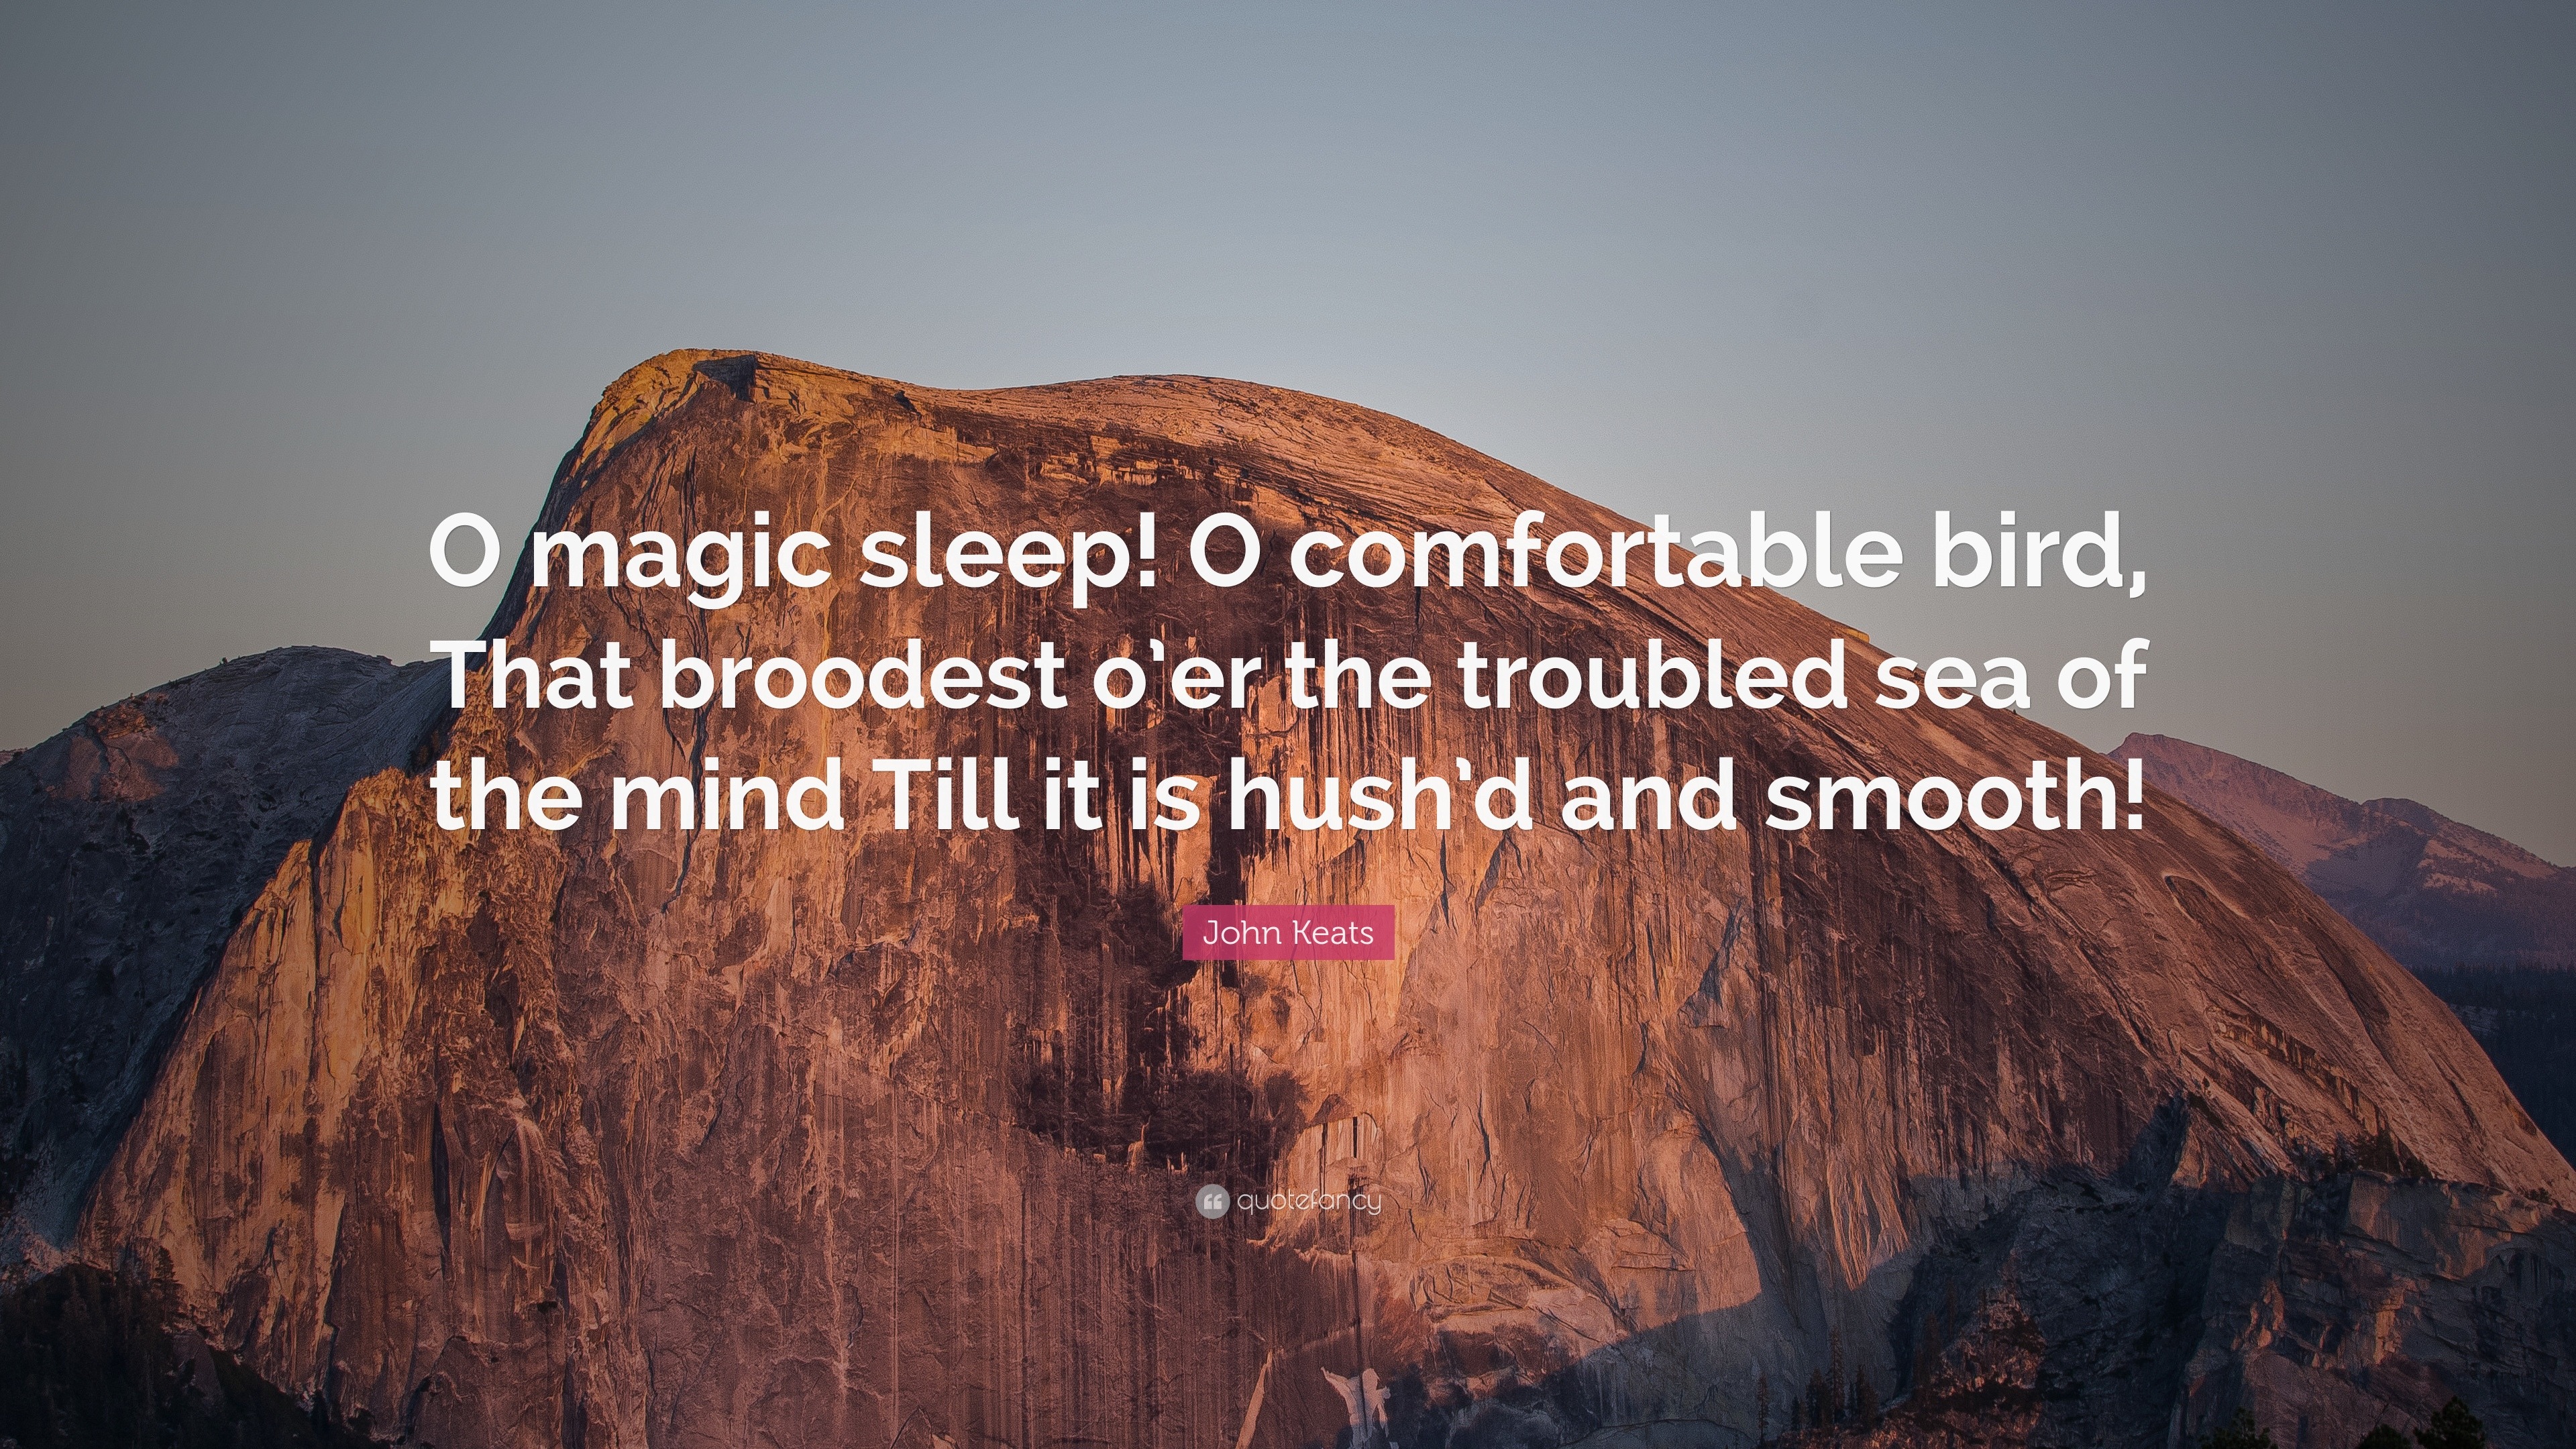 John Keats Quote: “O magic sleep! O comfortable bird, That broodest o'er  the troubled sea